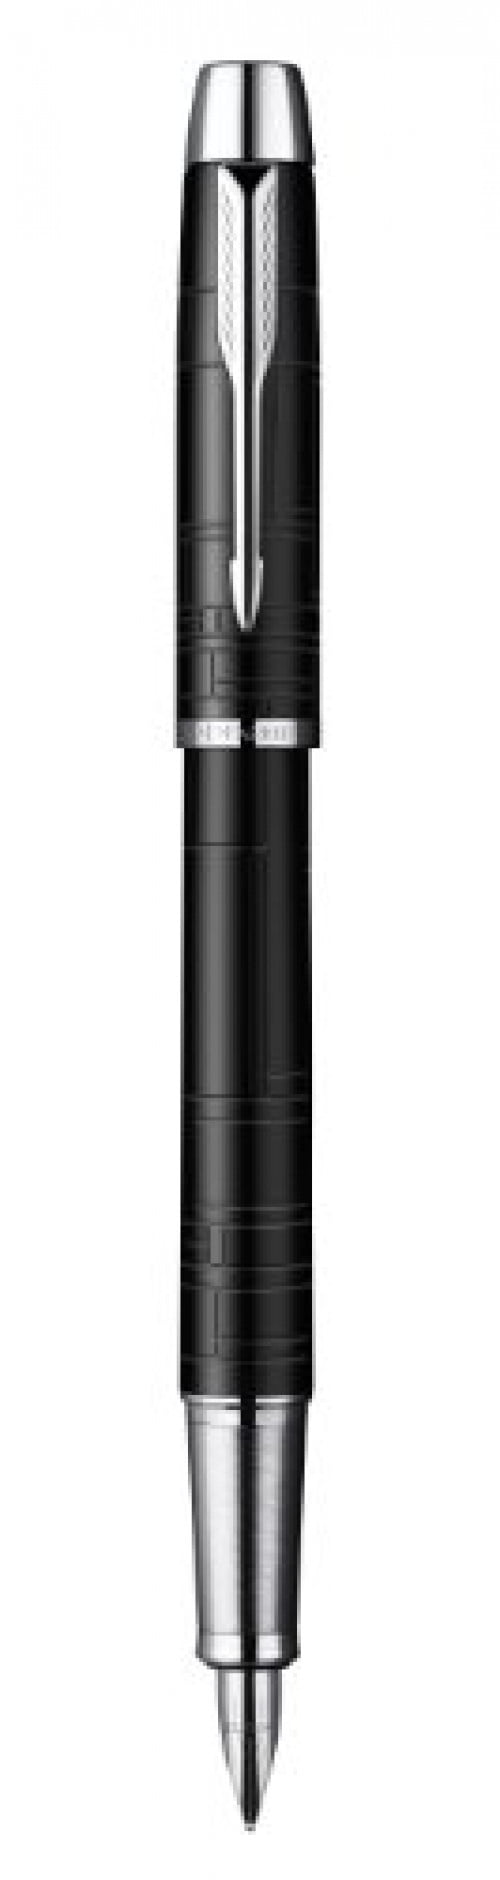 Parker IM Series Rollerball Pen Matte Black Chrome Trim 0.5mm Black Ink 